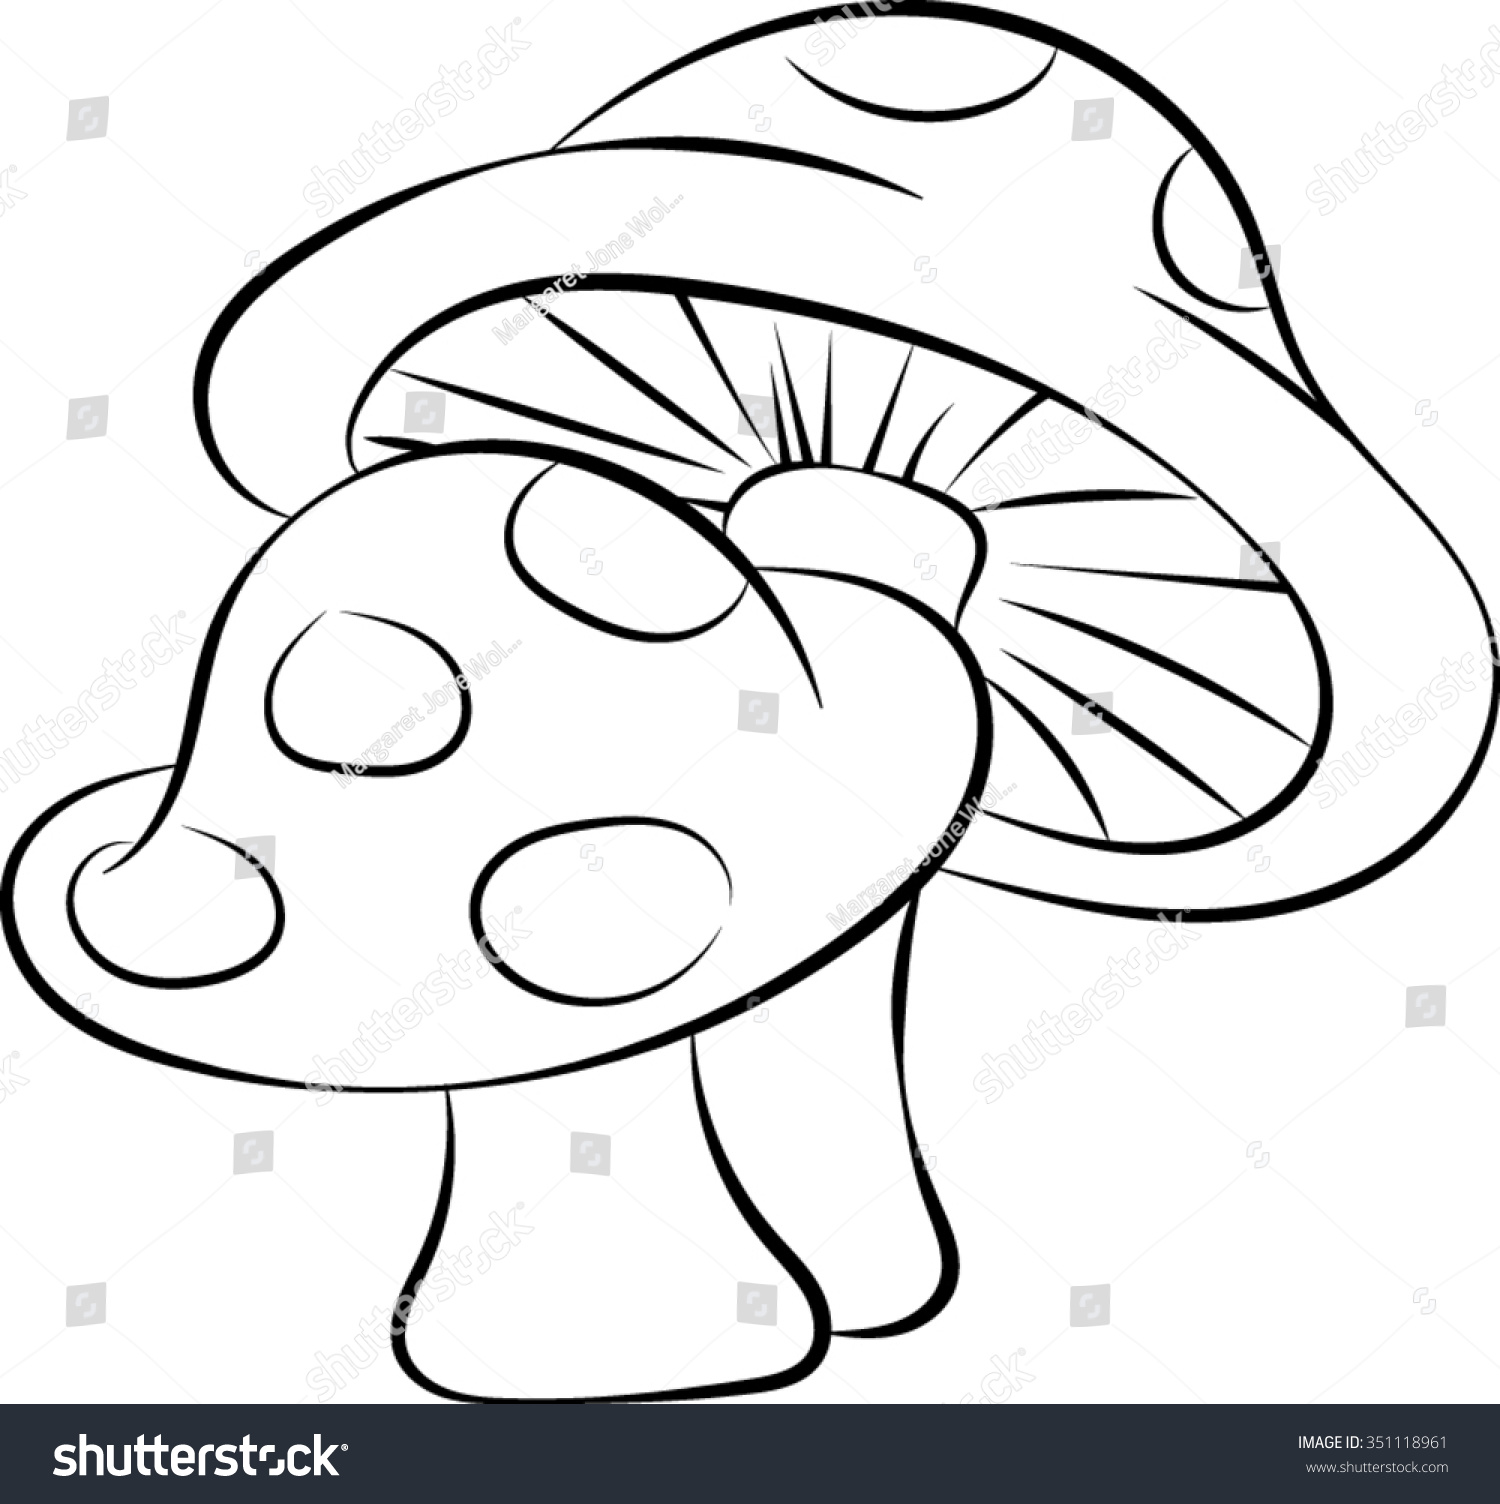 mushroom outline